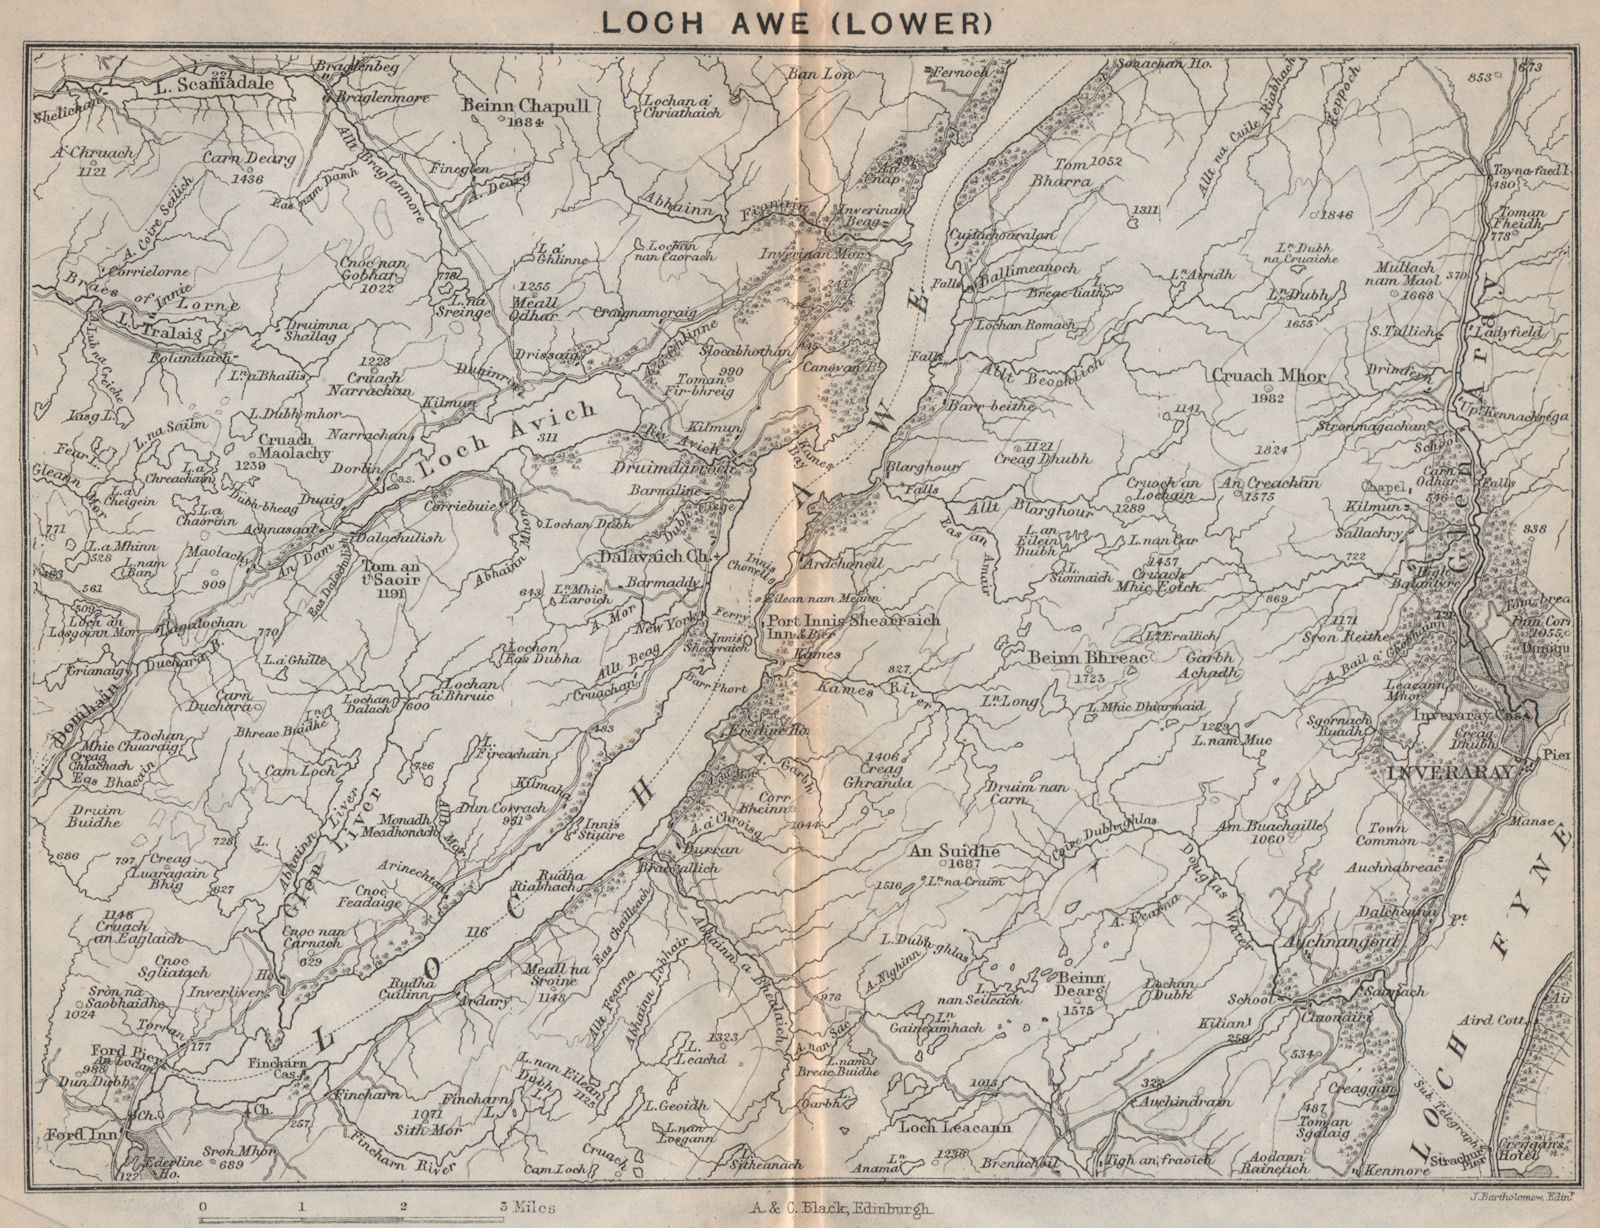 Lower Loch Awe. Loch Fyne. Loch Avich. Inverary. Scotland 1886 old antique map